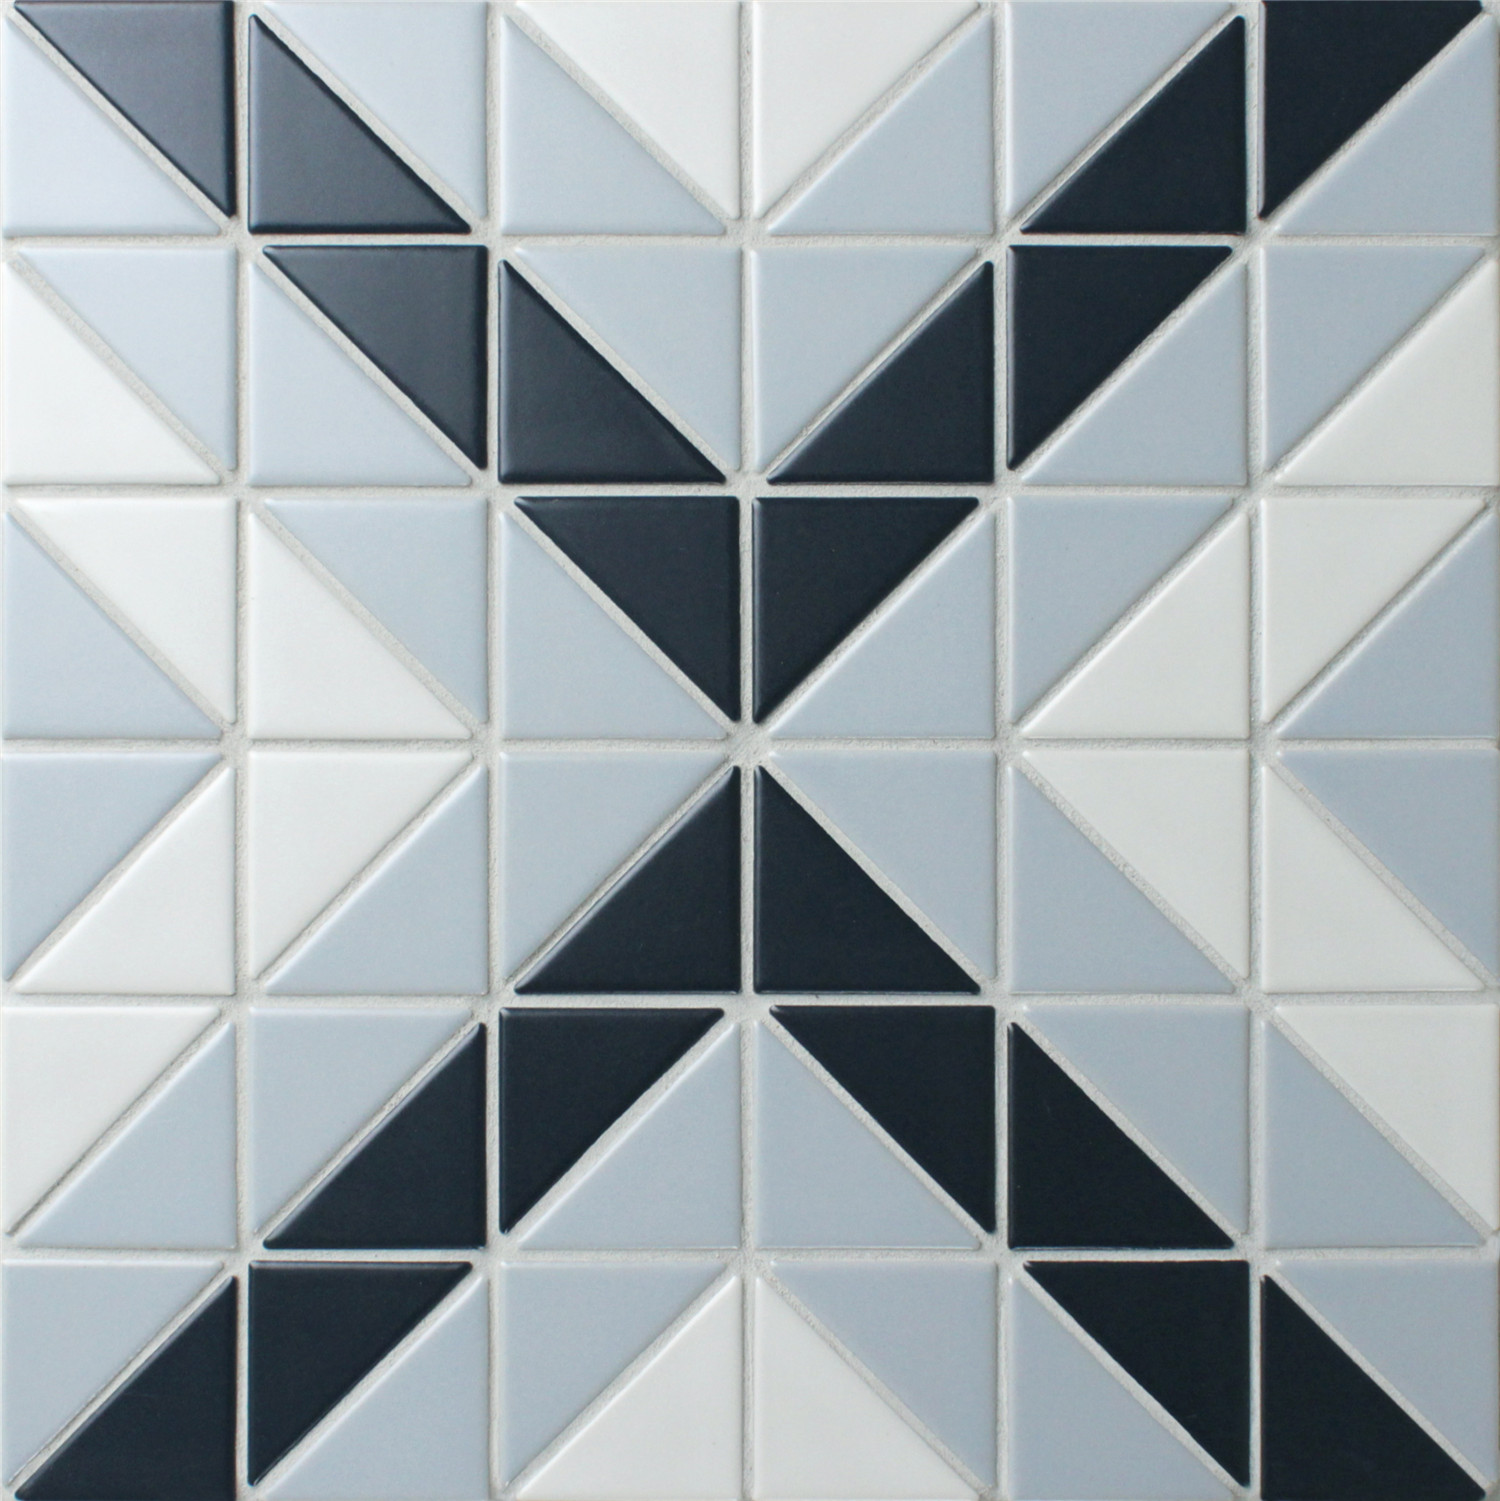 Unique Geometric Tile Design for Small Space